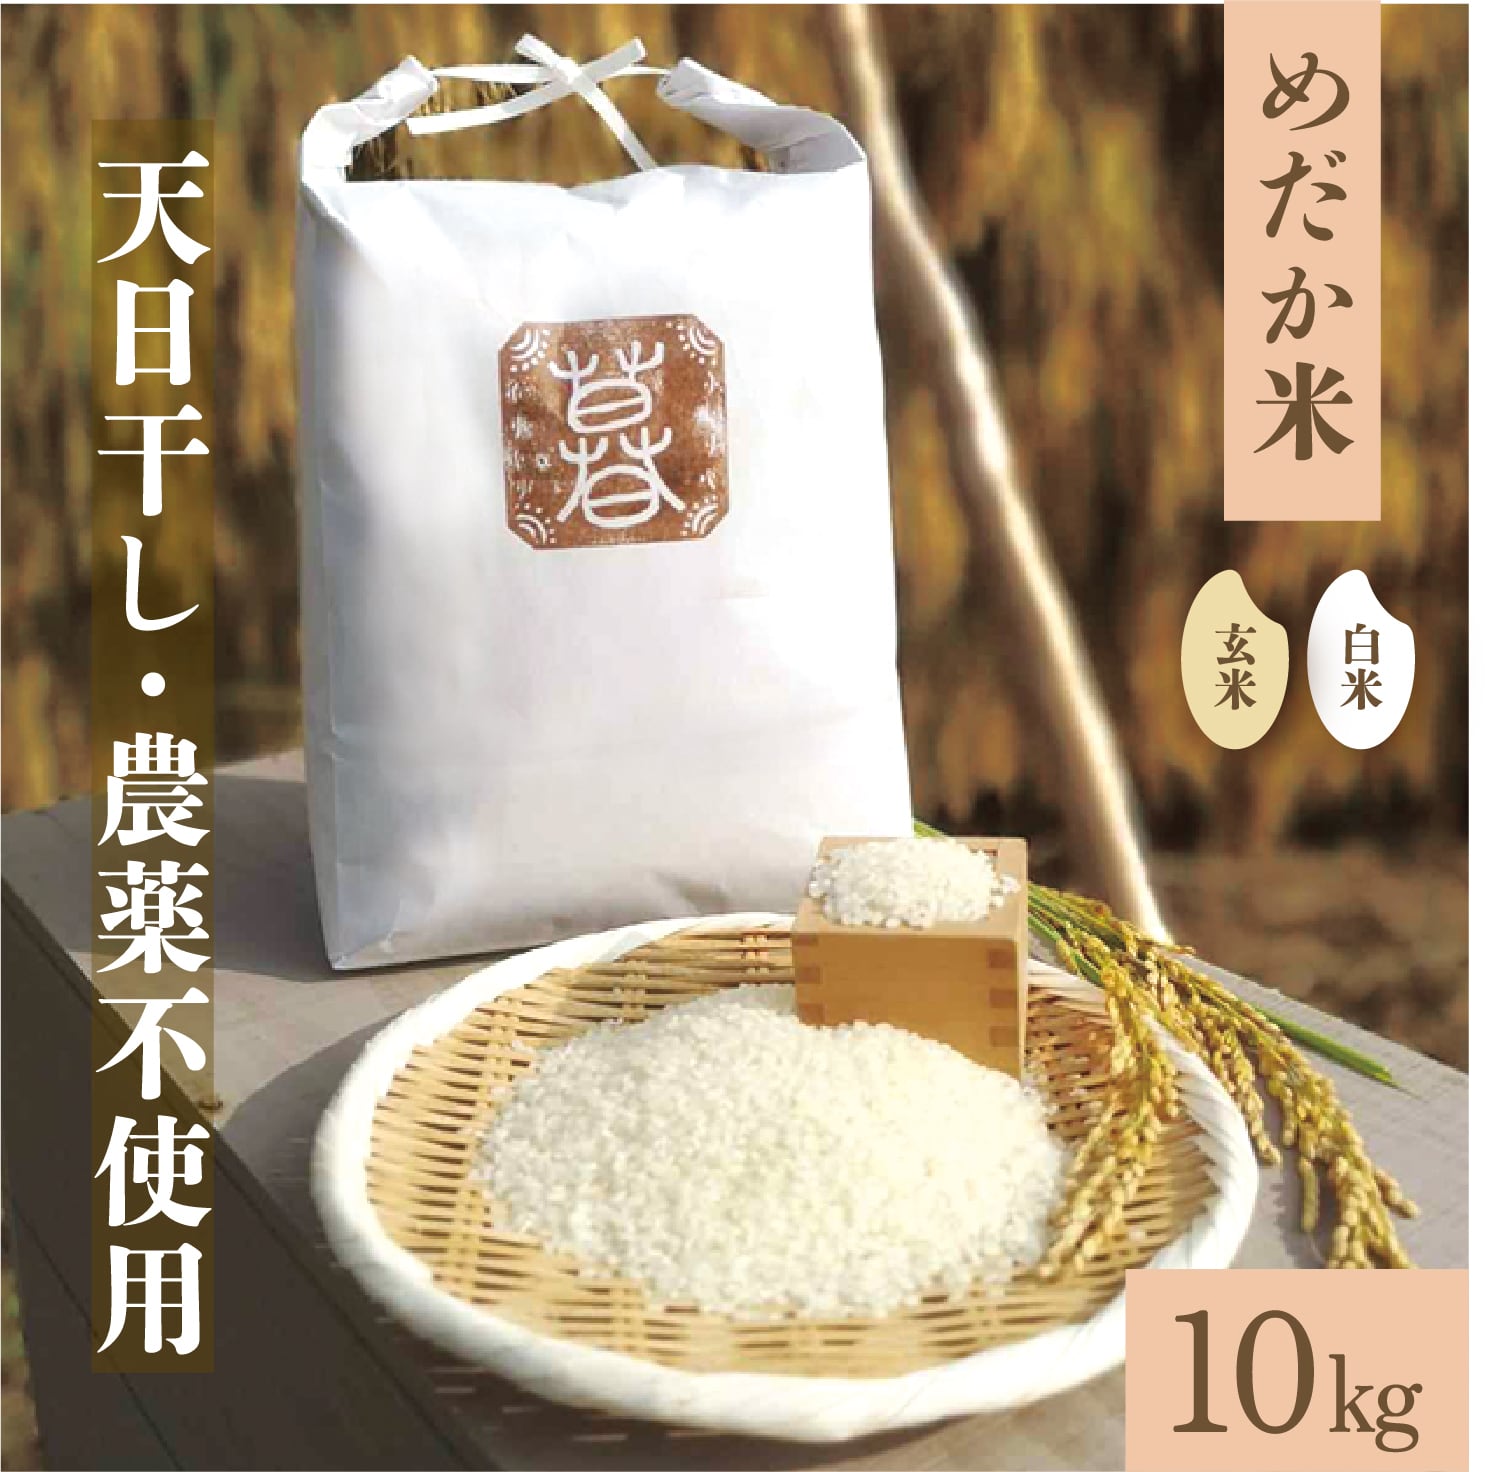 農薬・肥料不使用、天日干しのお米 - 米・雑穀・粉類